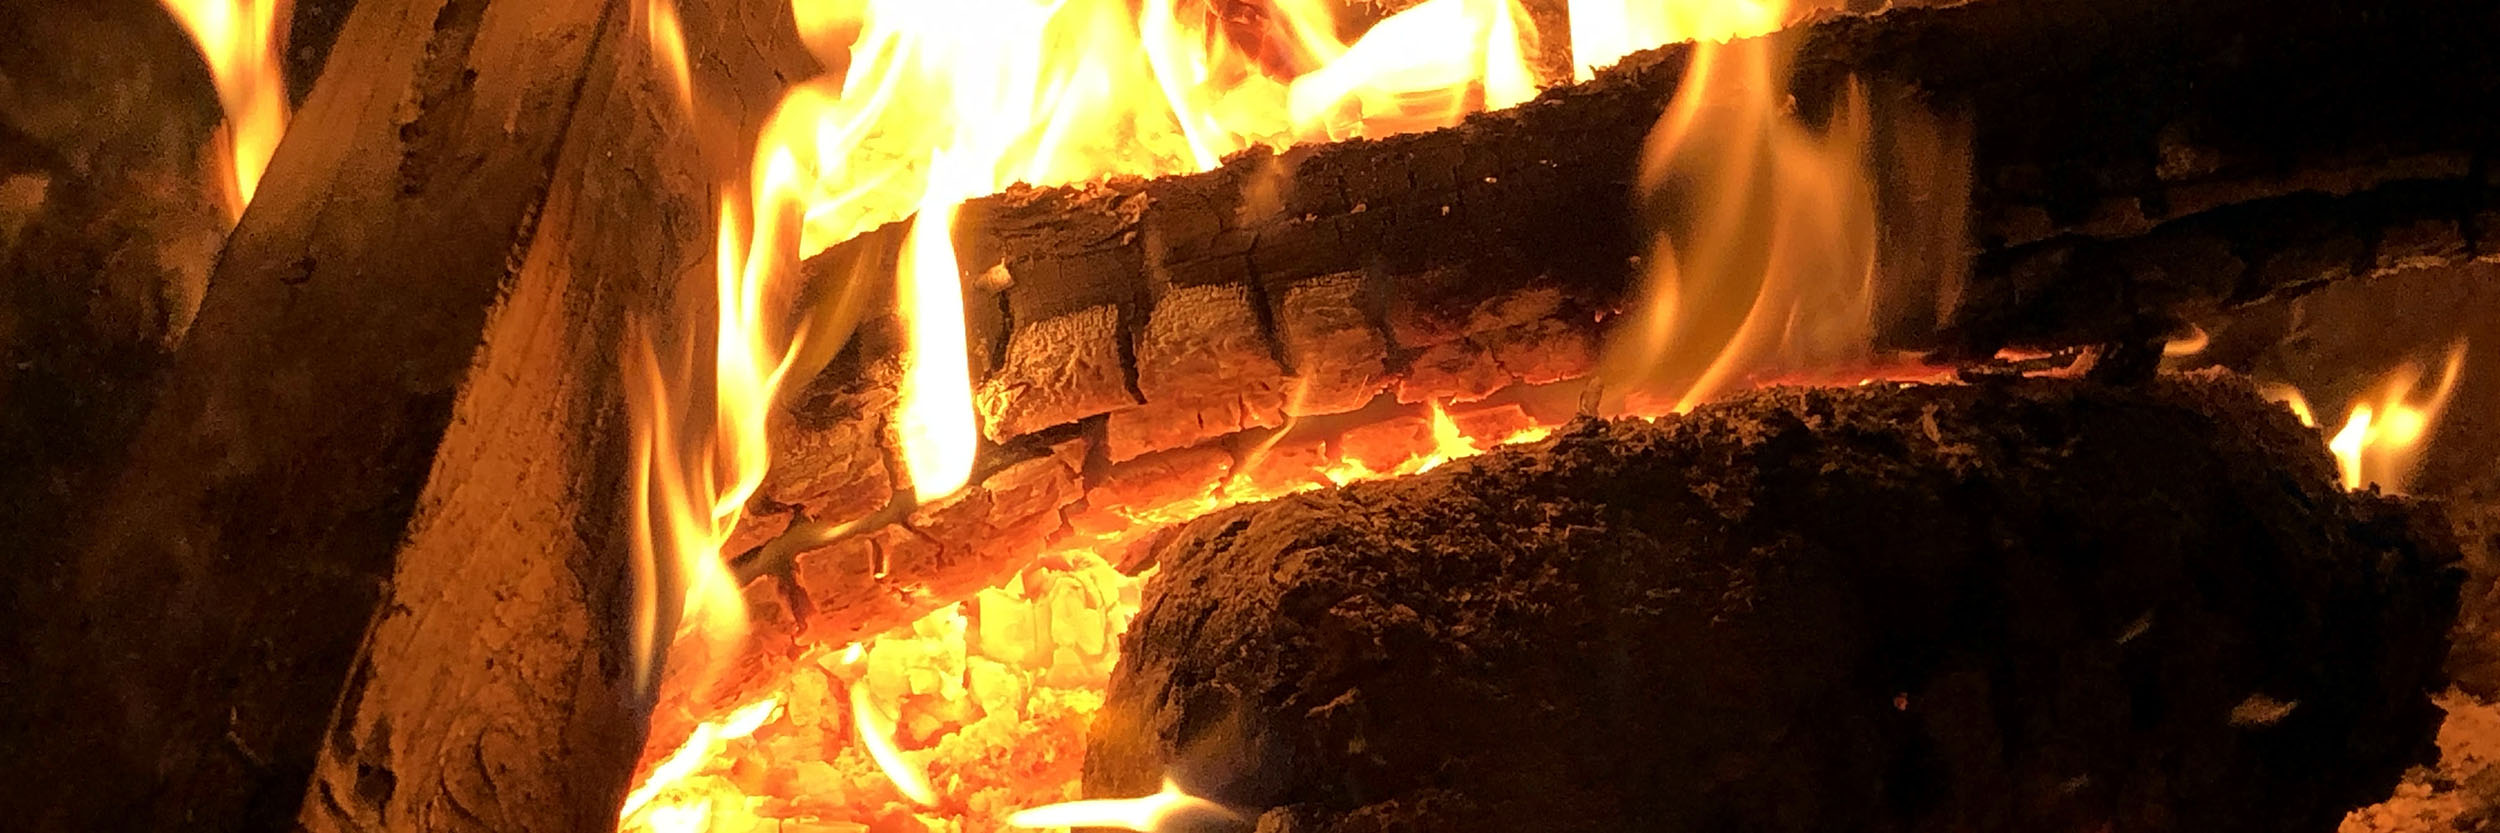 A fire burning wood